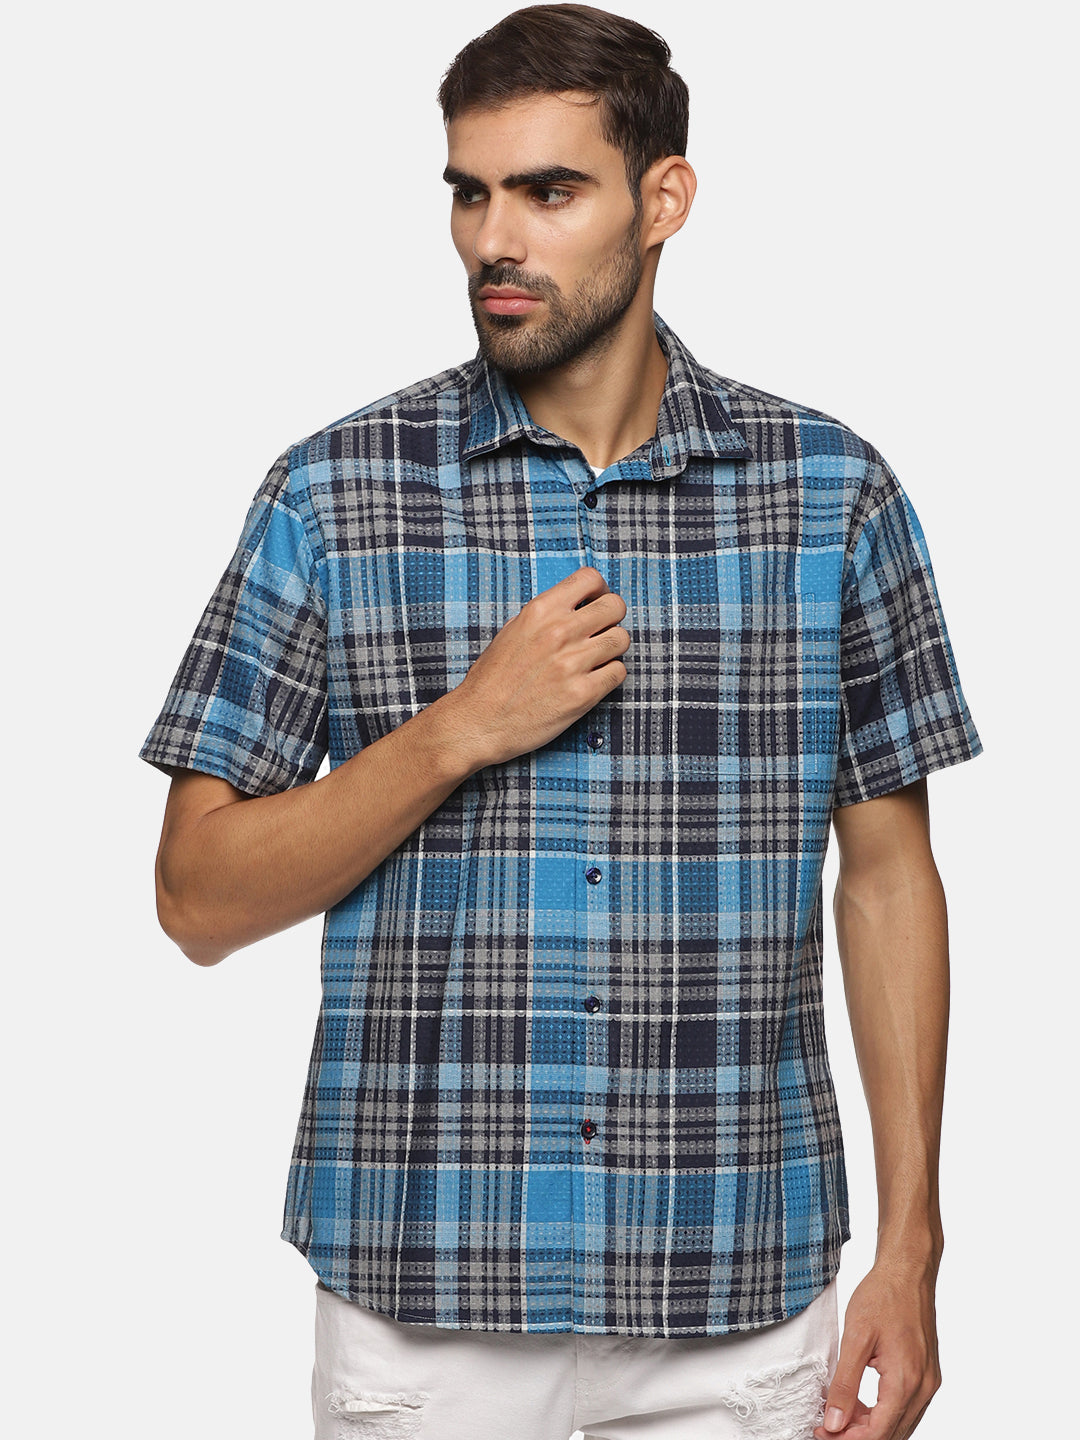 Men Blue & Black Checkered Slim Fit Casual Shirt, Men's Half Sleeve Cotton Shirt